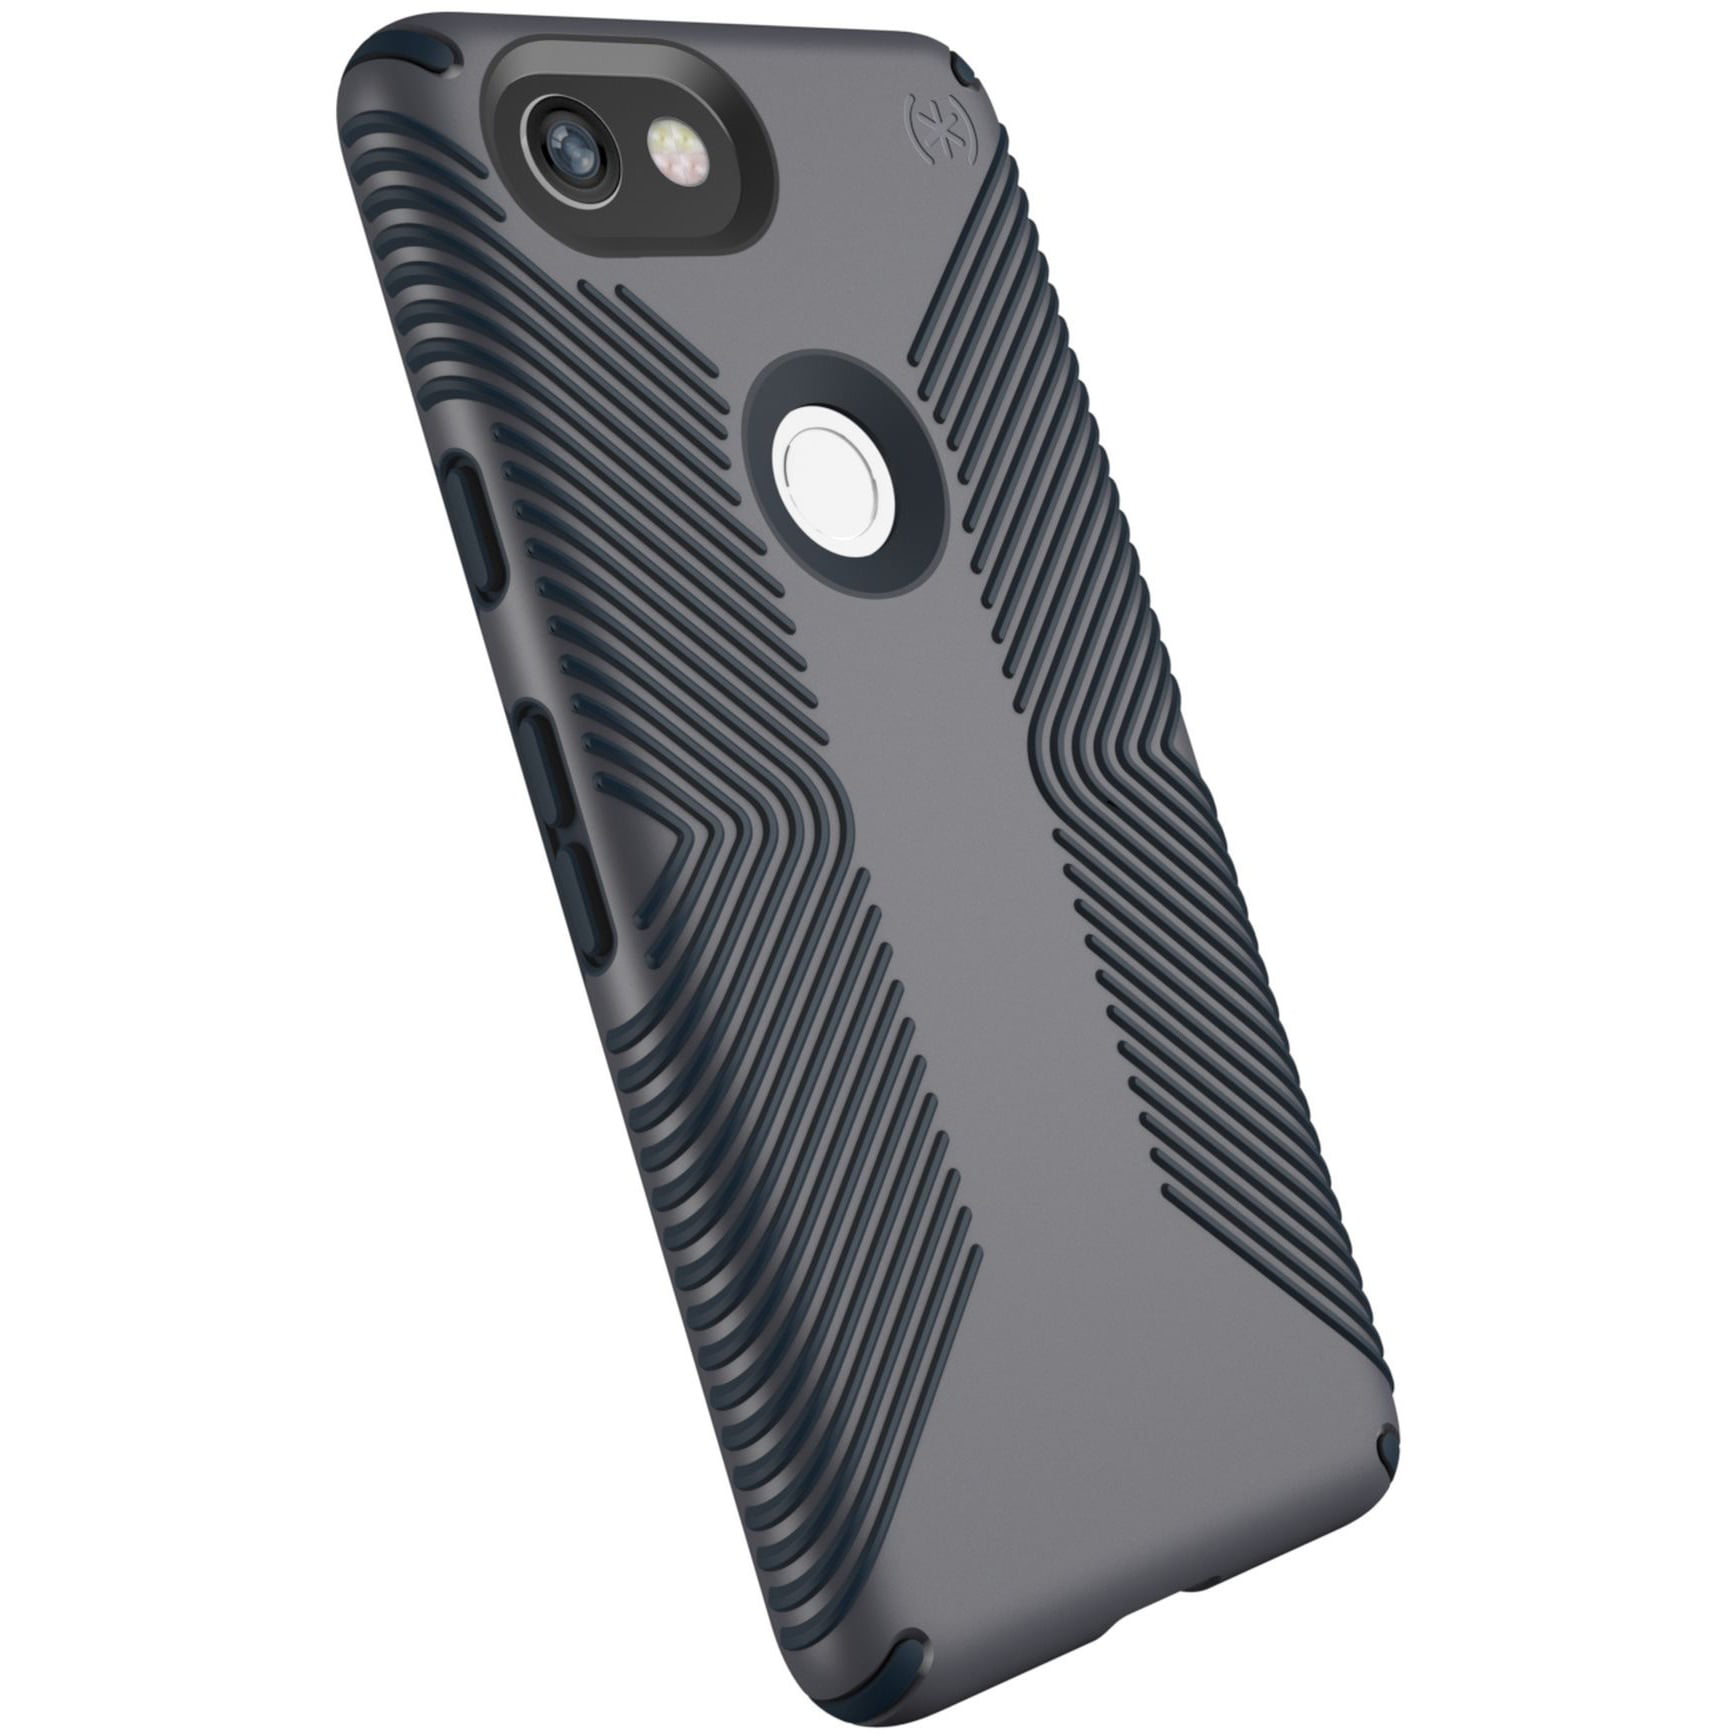 Speck Presidio Grip Phone Cover Case for Google Pixel 3 Black 7662 for sale online 